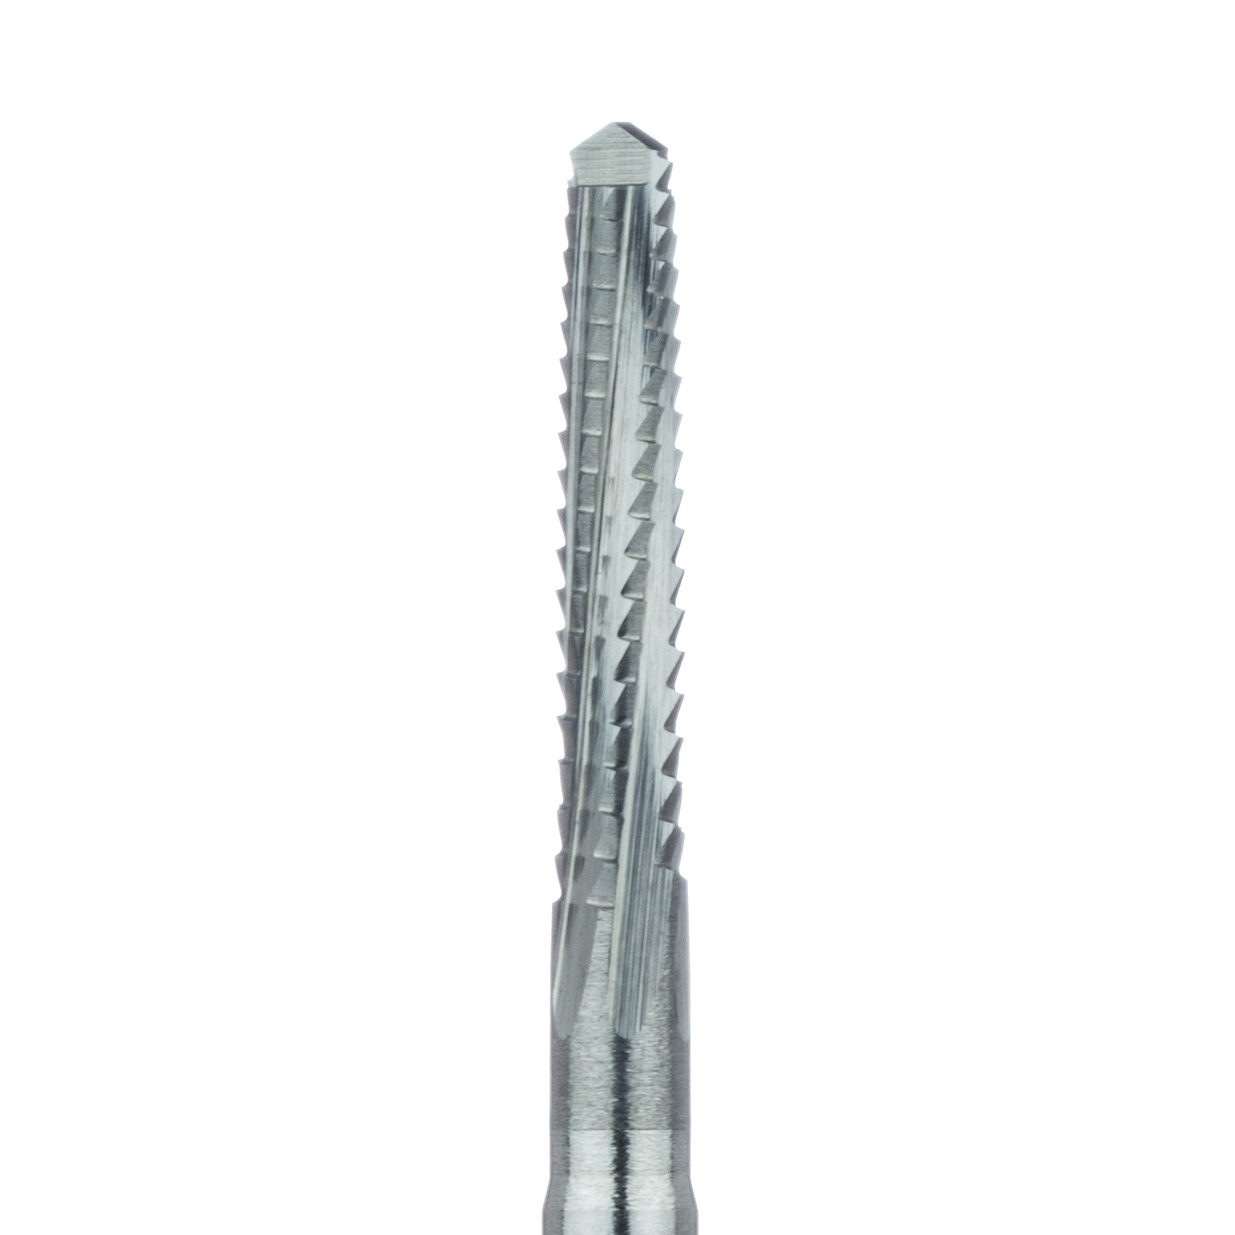 HM166-021-RAL Surgical Lindemann Carbide Bur, Cross Cut, Spade Tip, 2.1mm Ø, Length 11mm, RAL